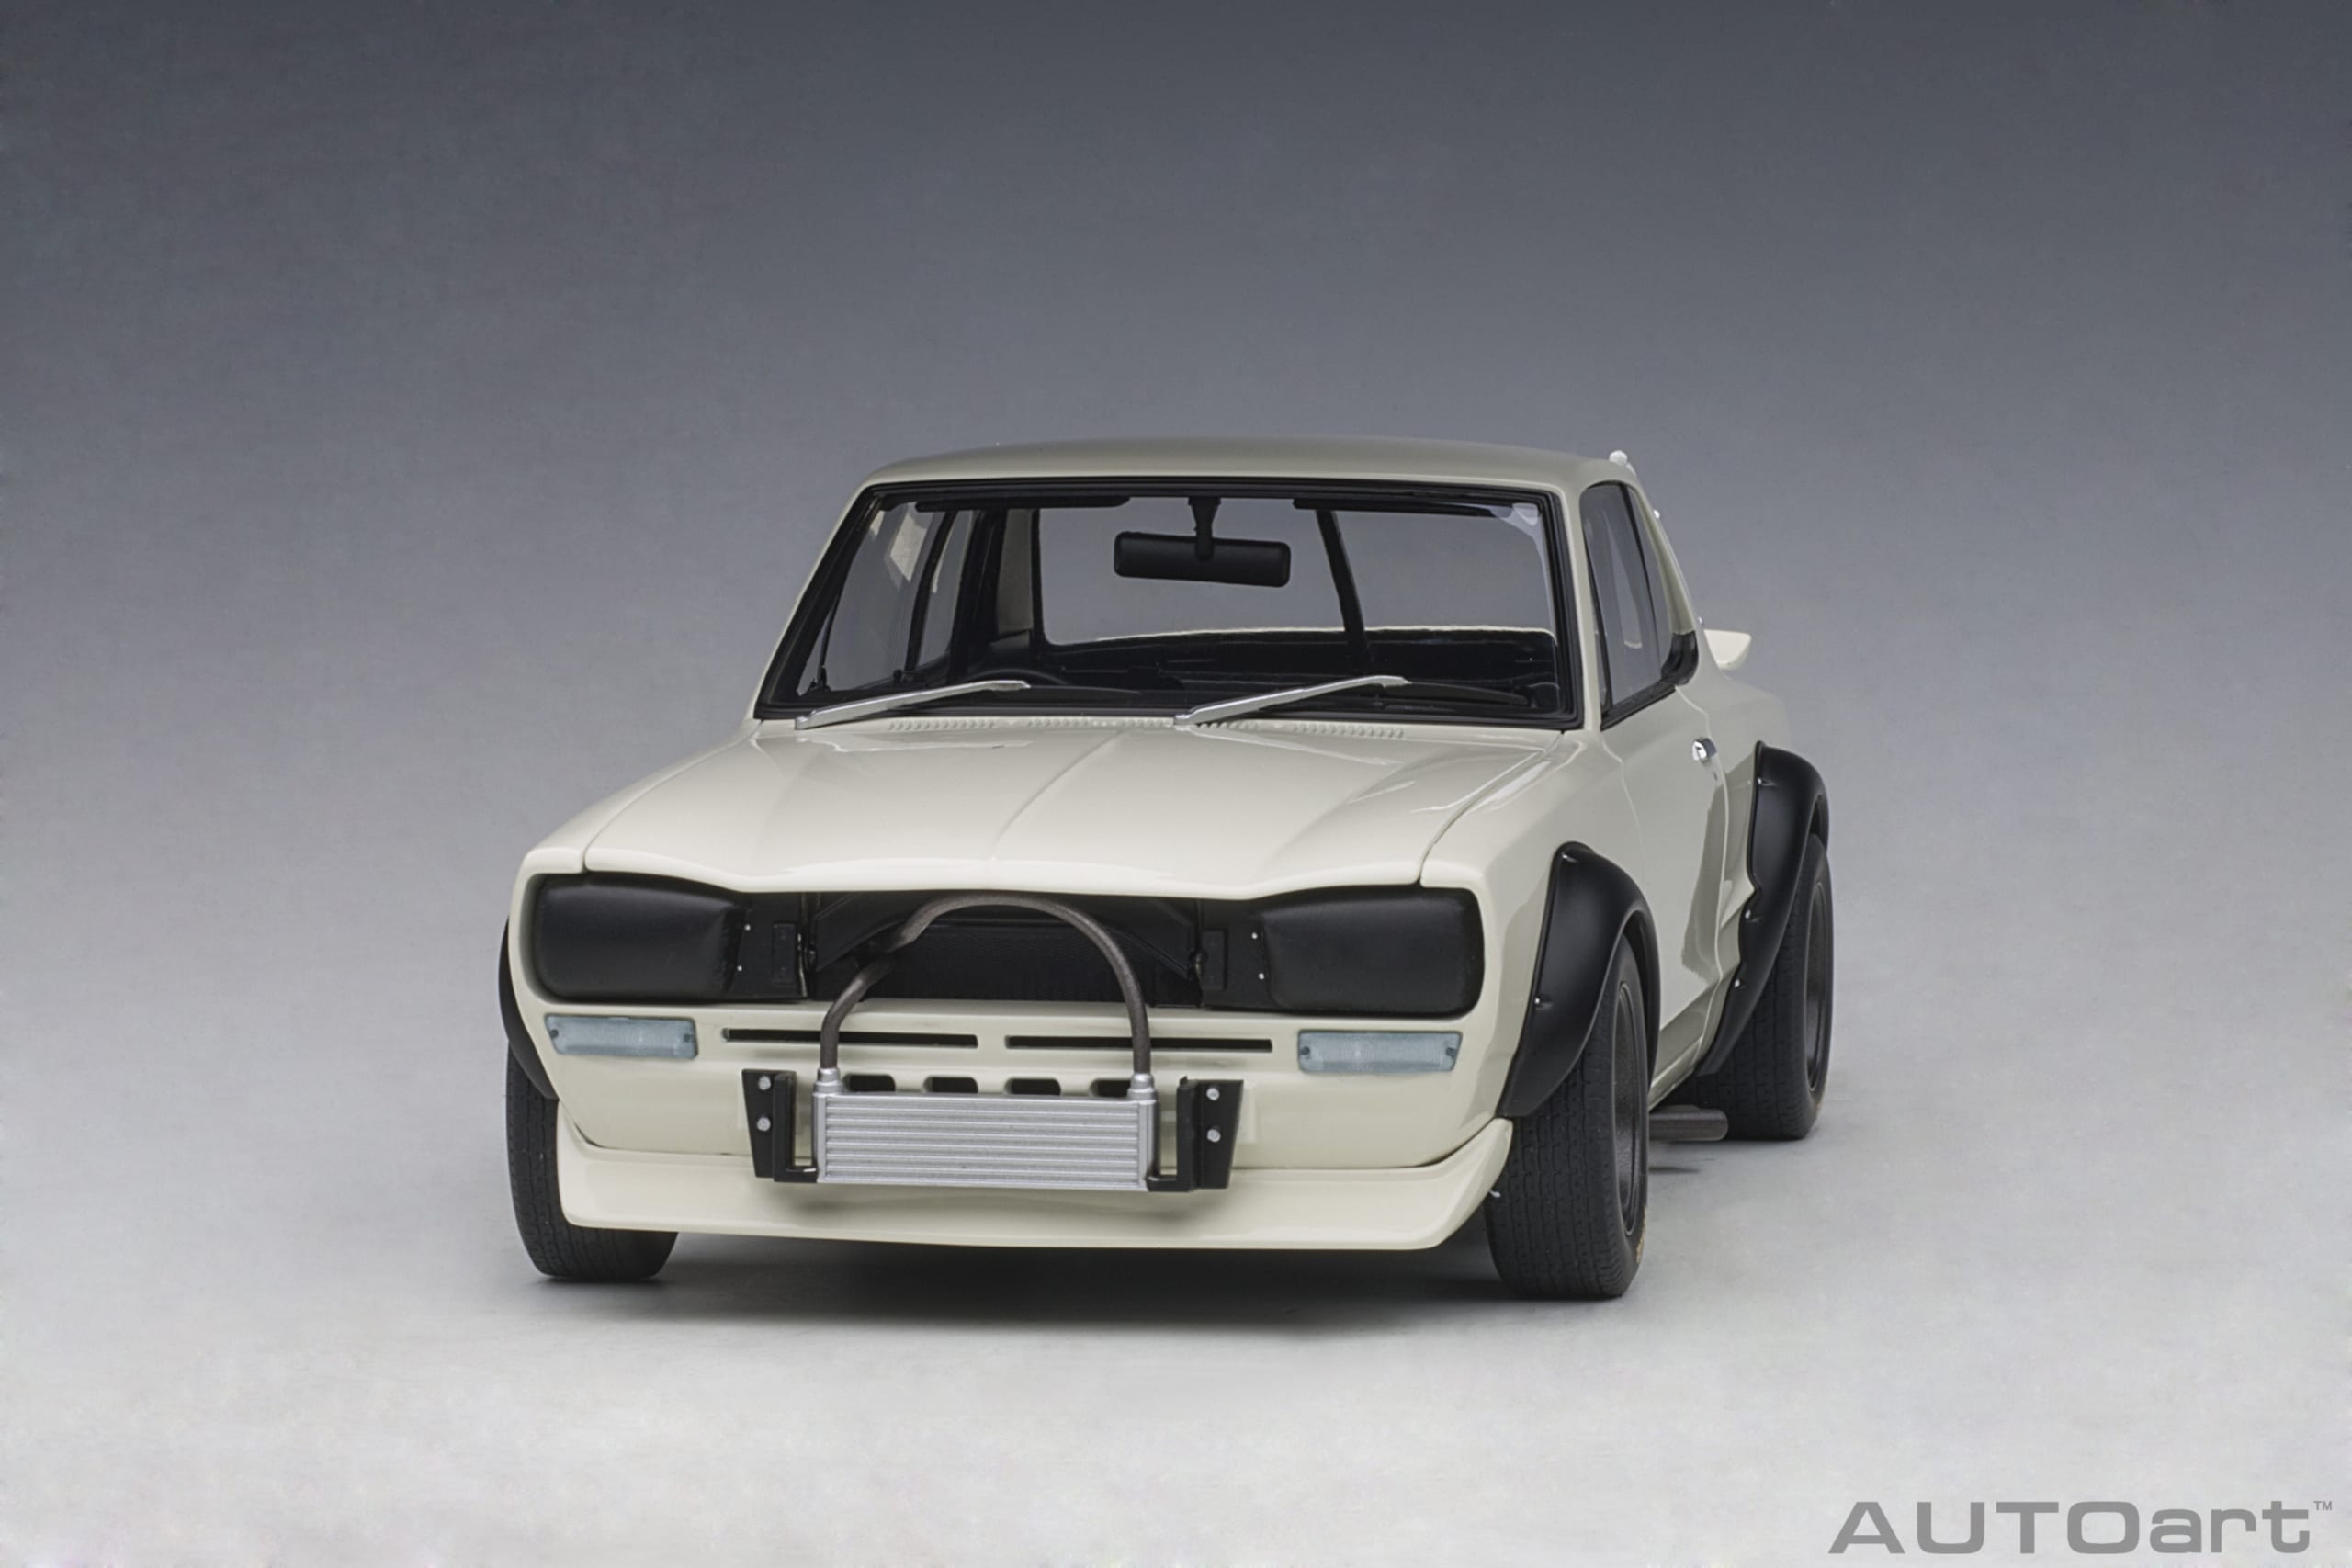 87279 Nissan Skyline GT-R (KPGC-10) Racing 1972 Plain Body Version (White)